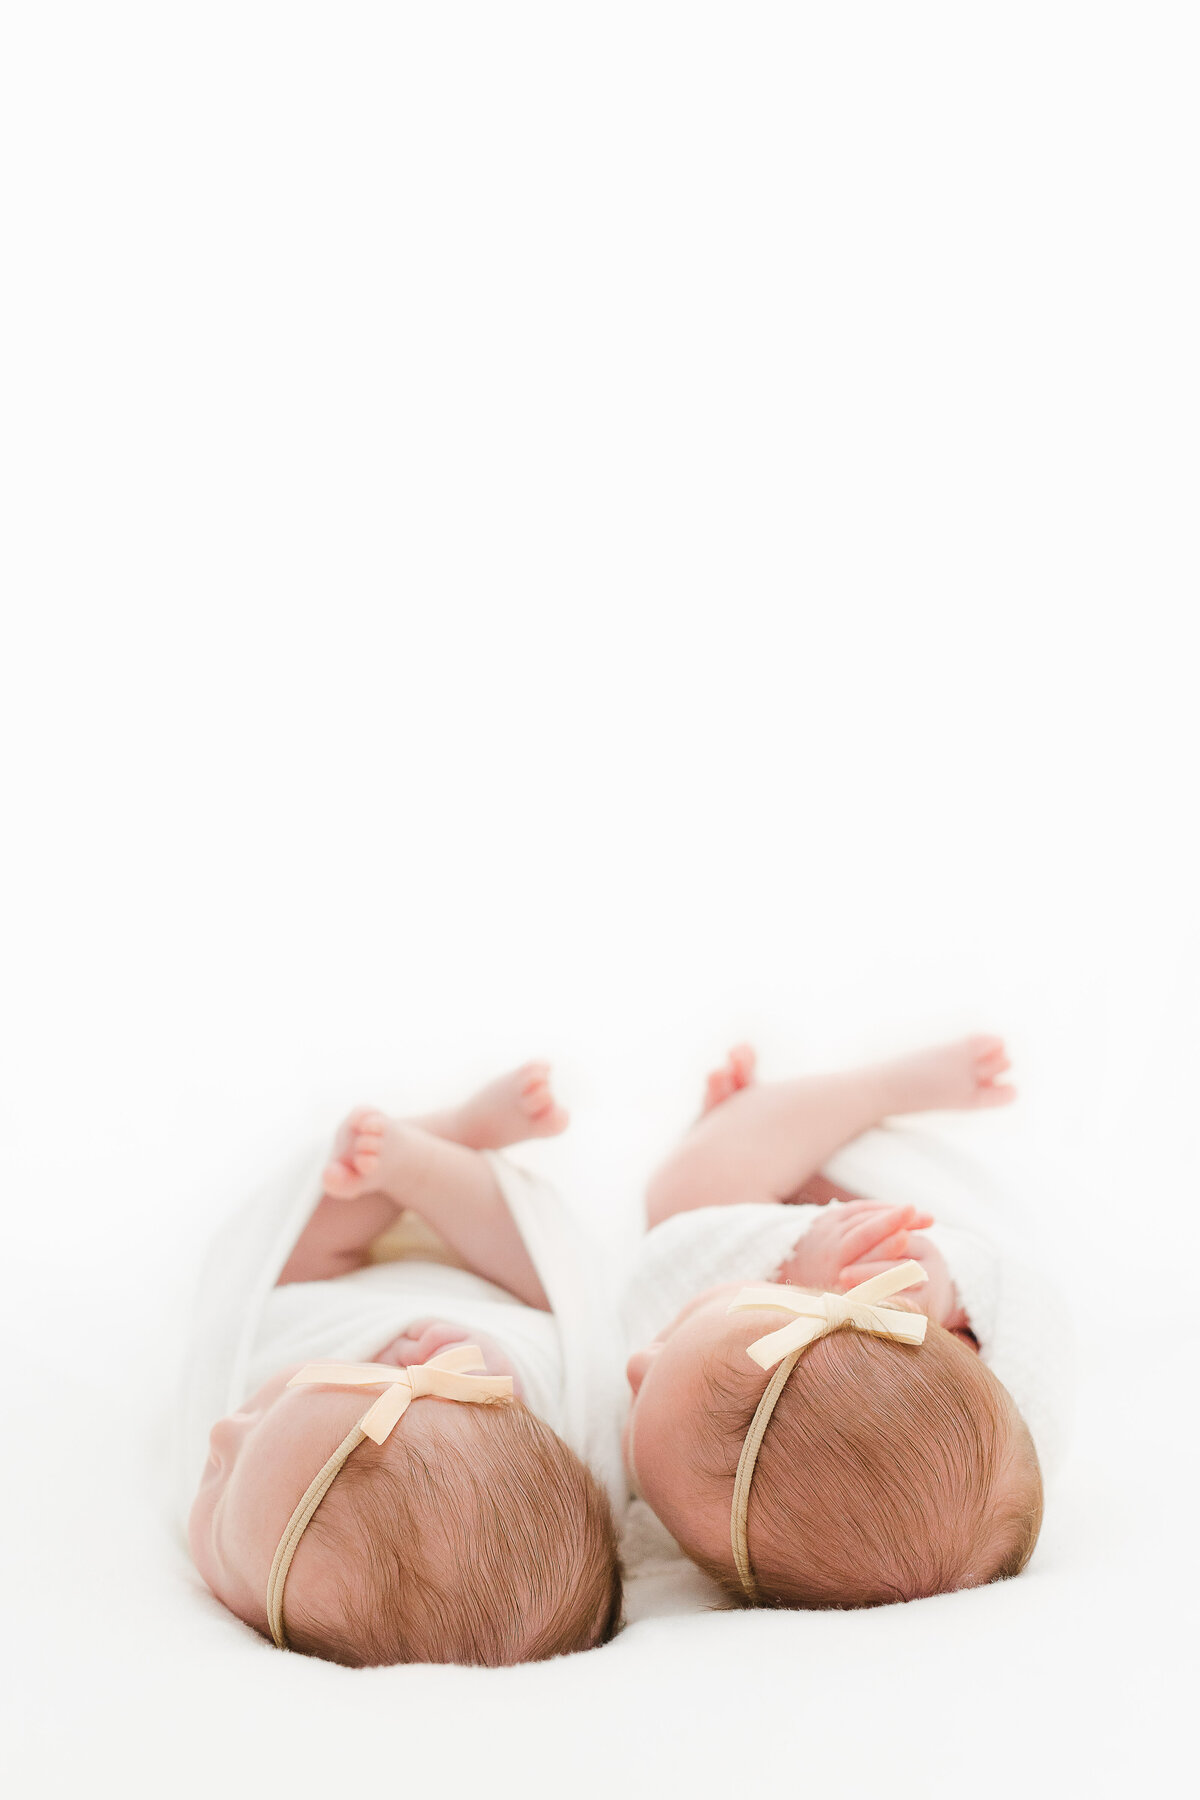 Twin Baby Photo Northern Virginia